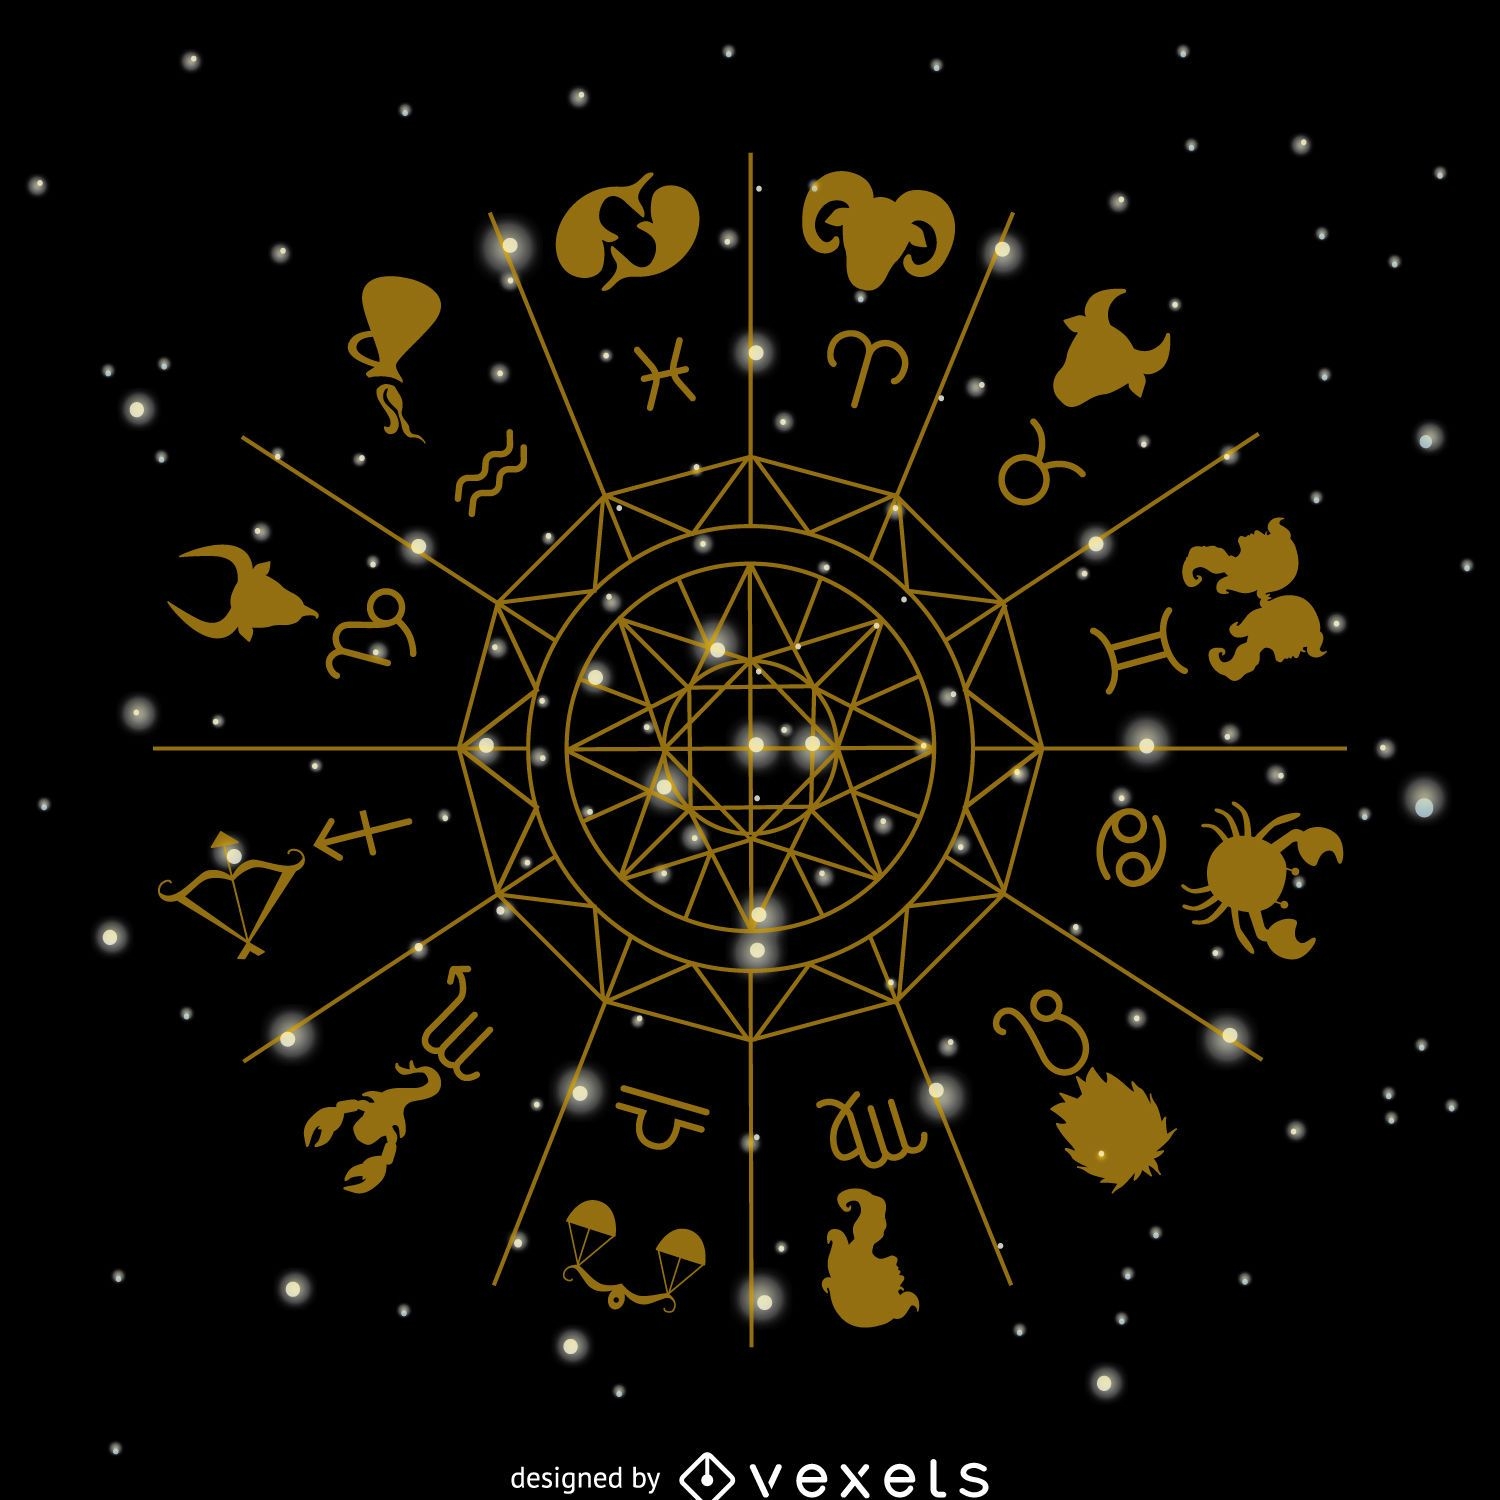 Zodiac signs circle illustration